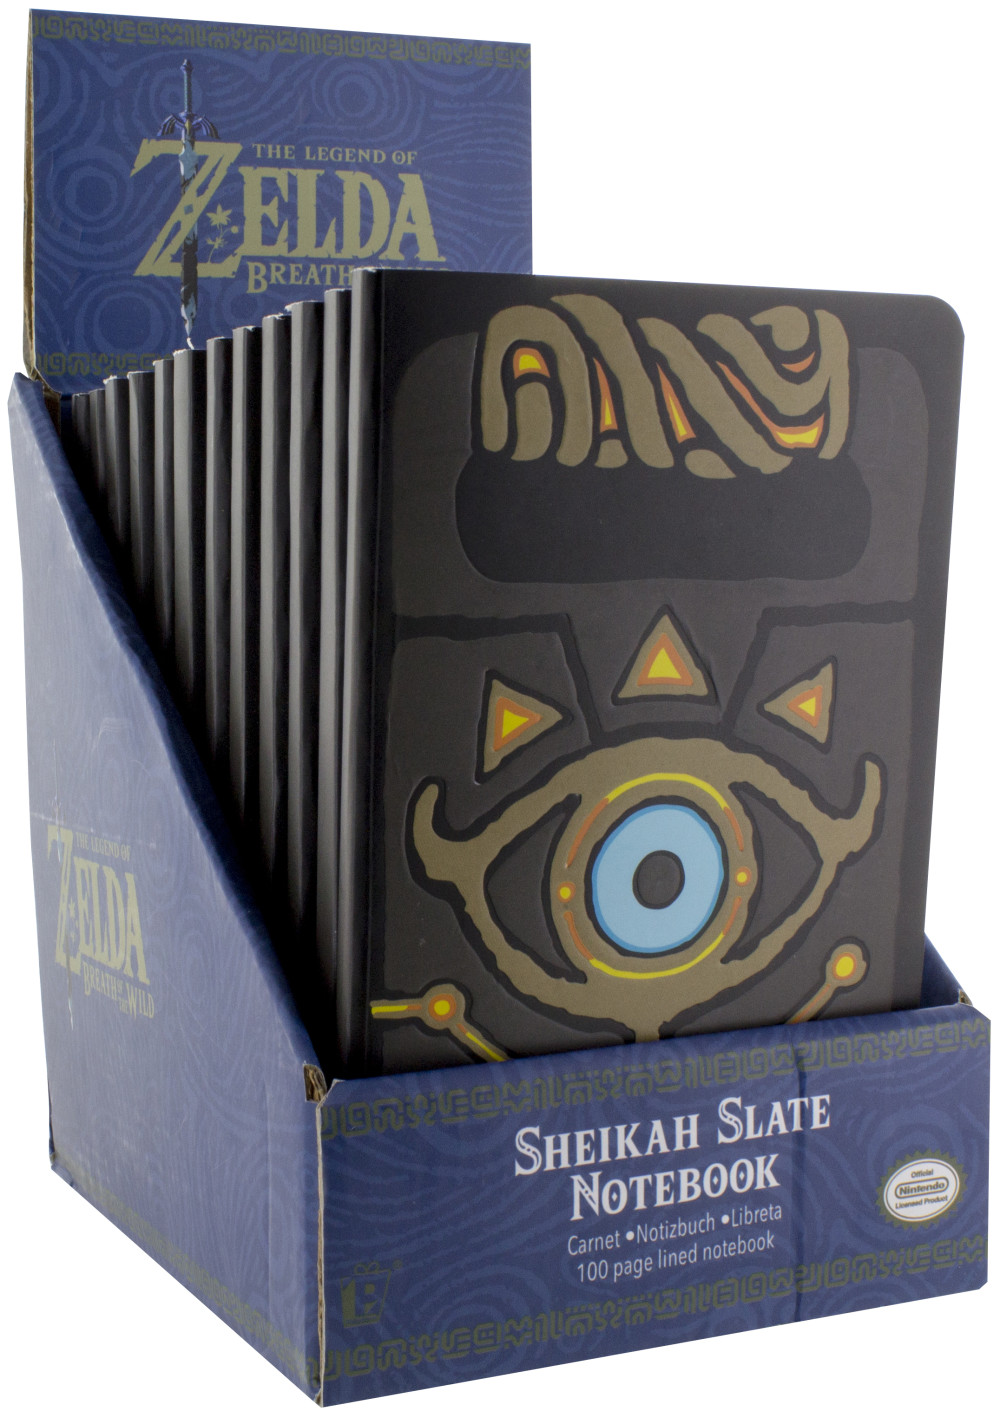  The Legend of Zelda: Breath of the Wild  Sheikah Slate